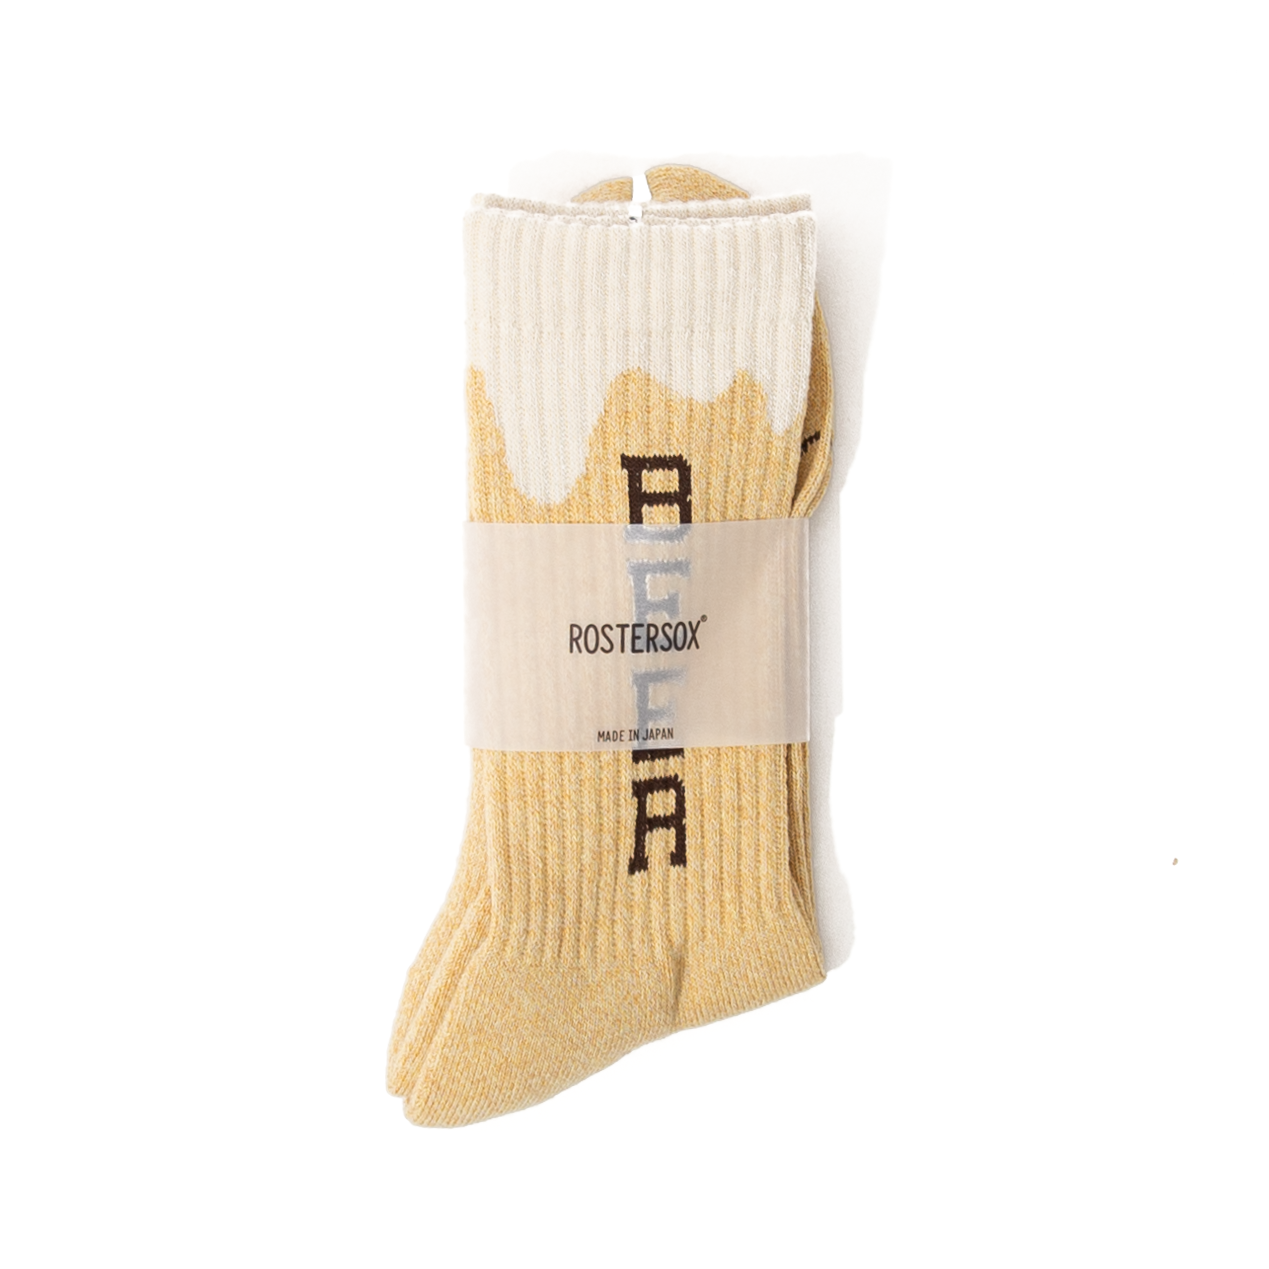 Rostersox Beer Sock